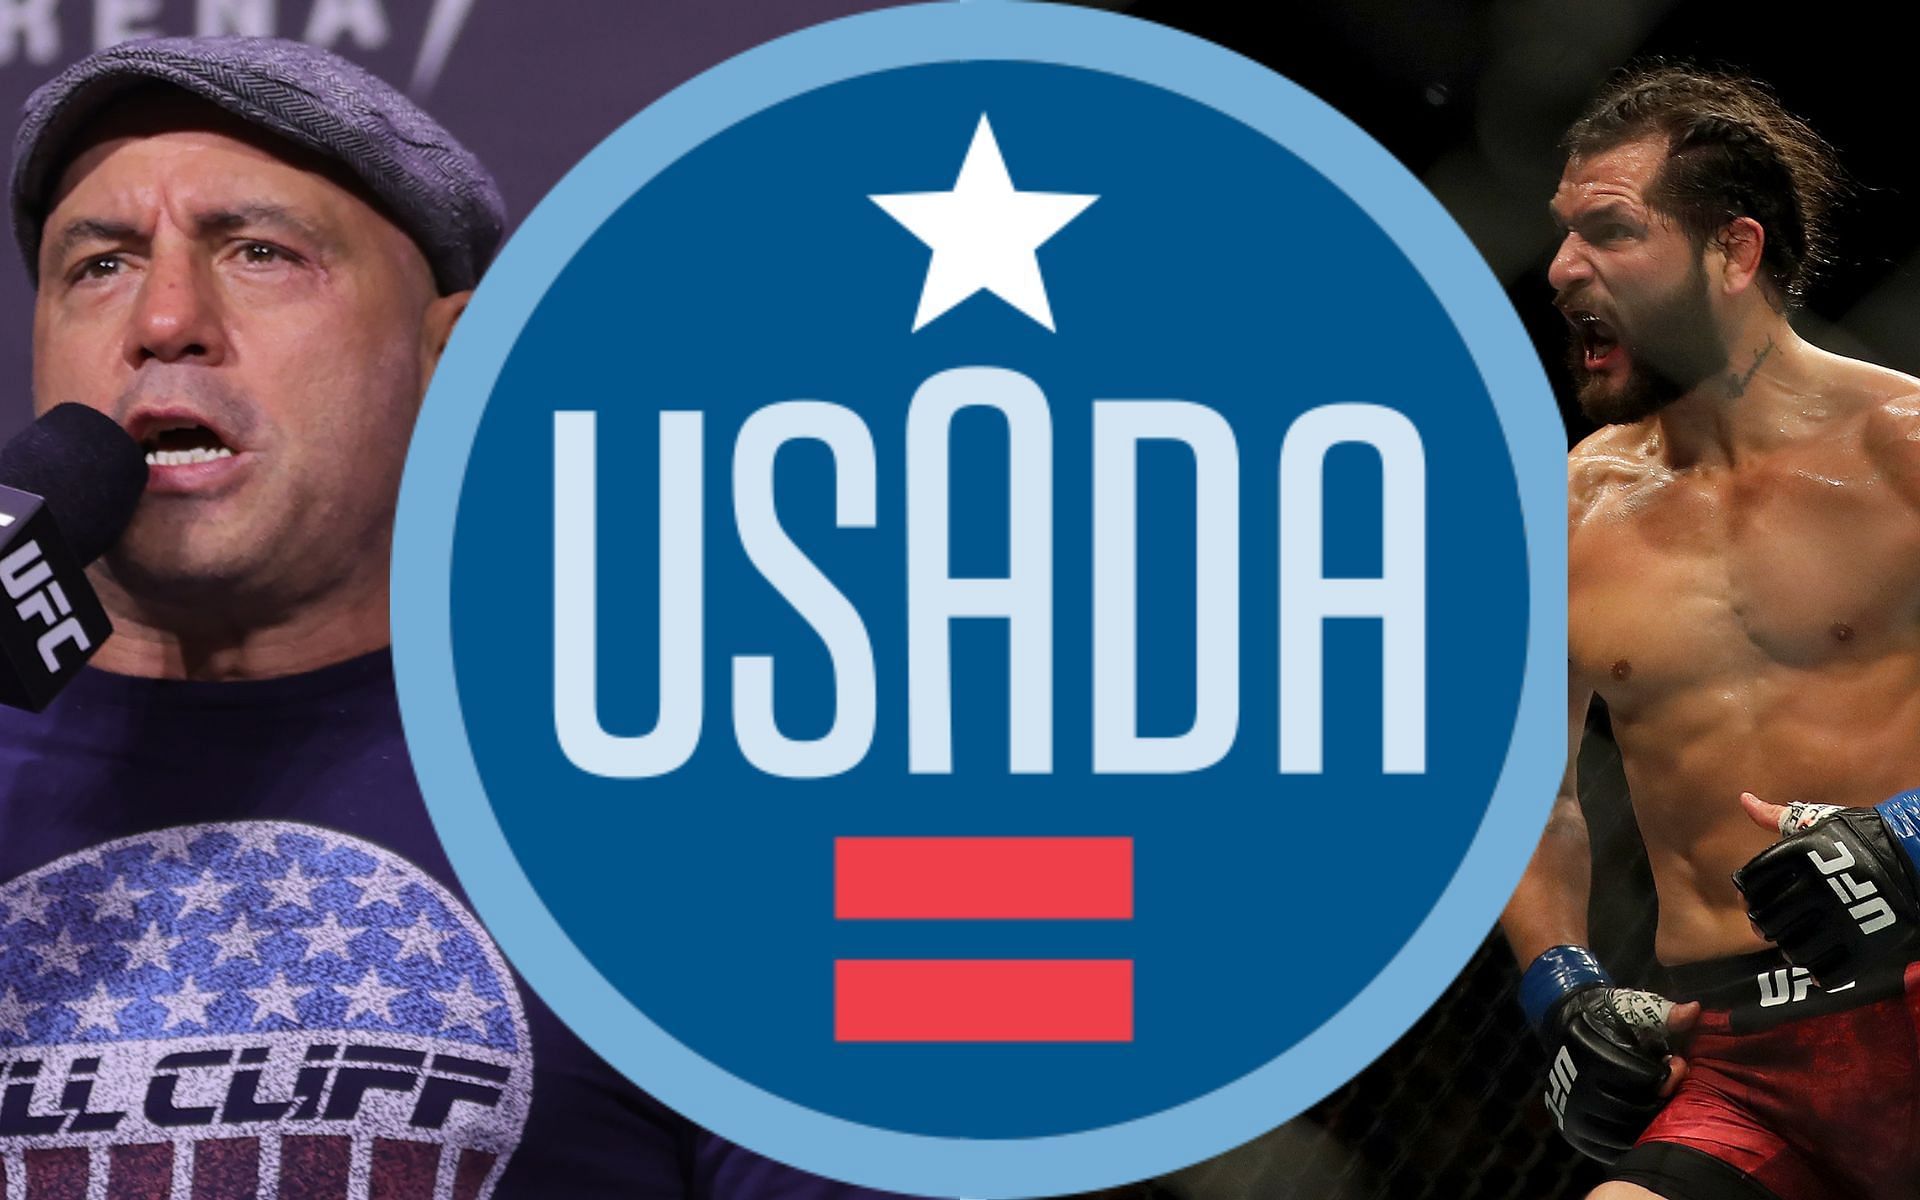 Joe Rogan (left), USADA logo (center), and Jorge Masvidal (right) (Image credits Getty Images and @usantidoping on Twitter)